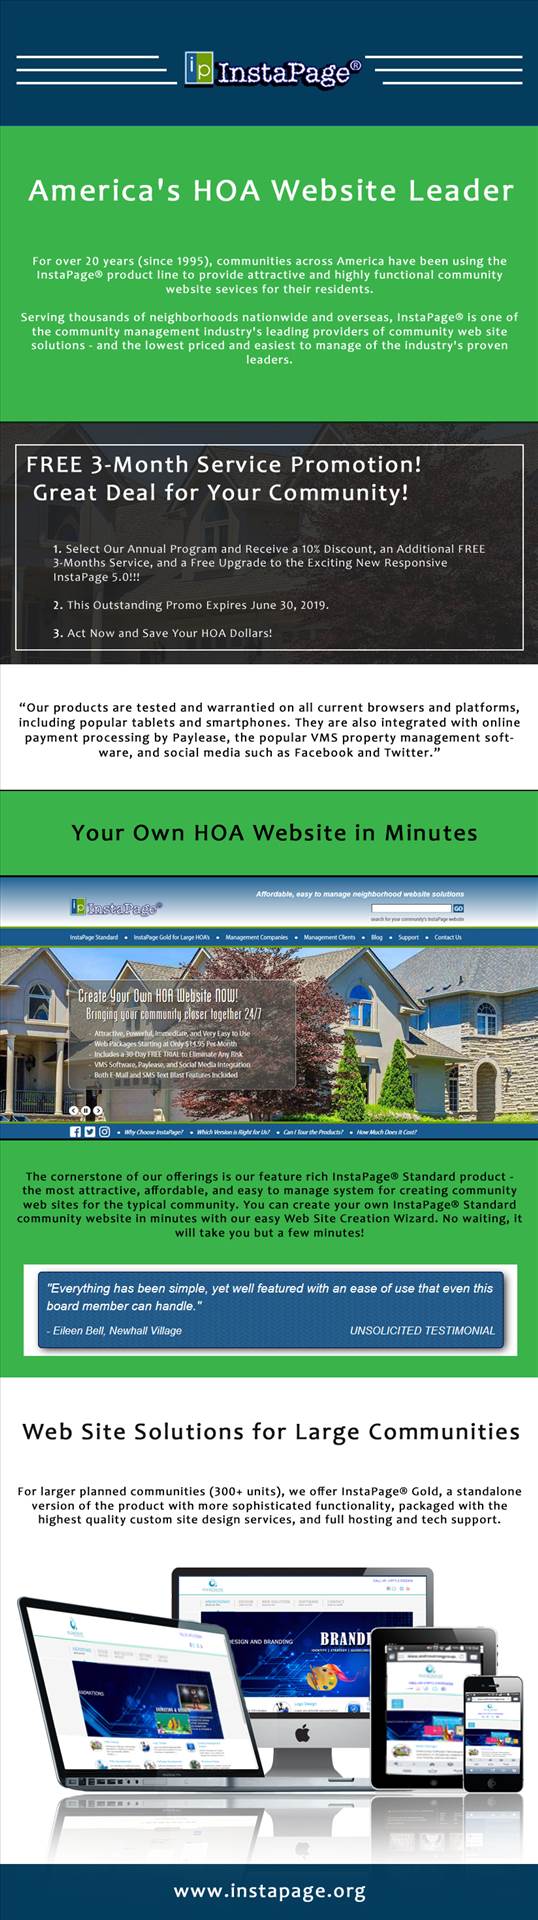 America's HOA Website Leader.jpg  by Instapage